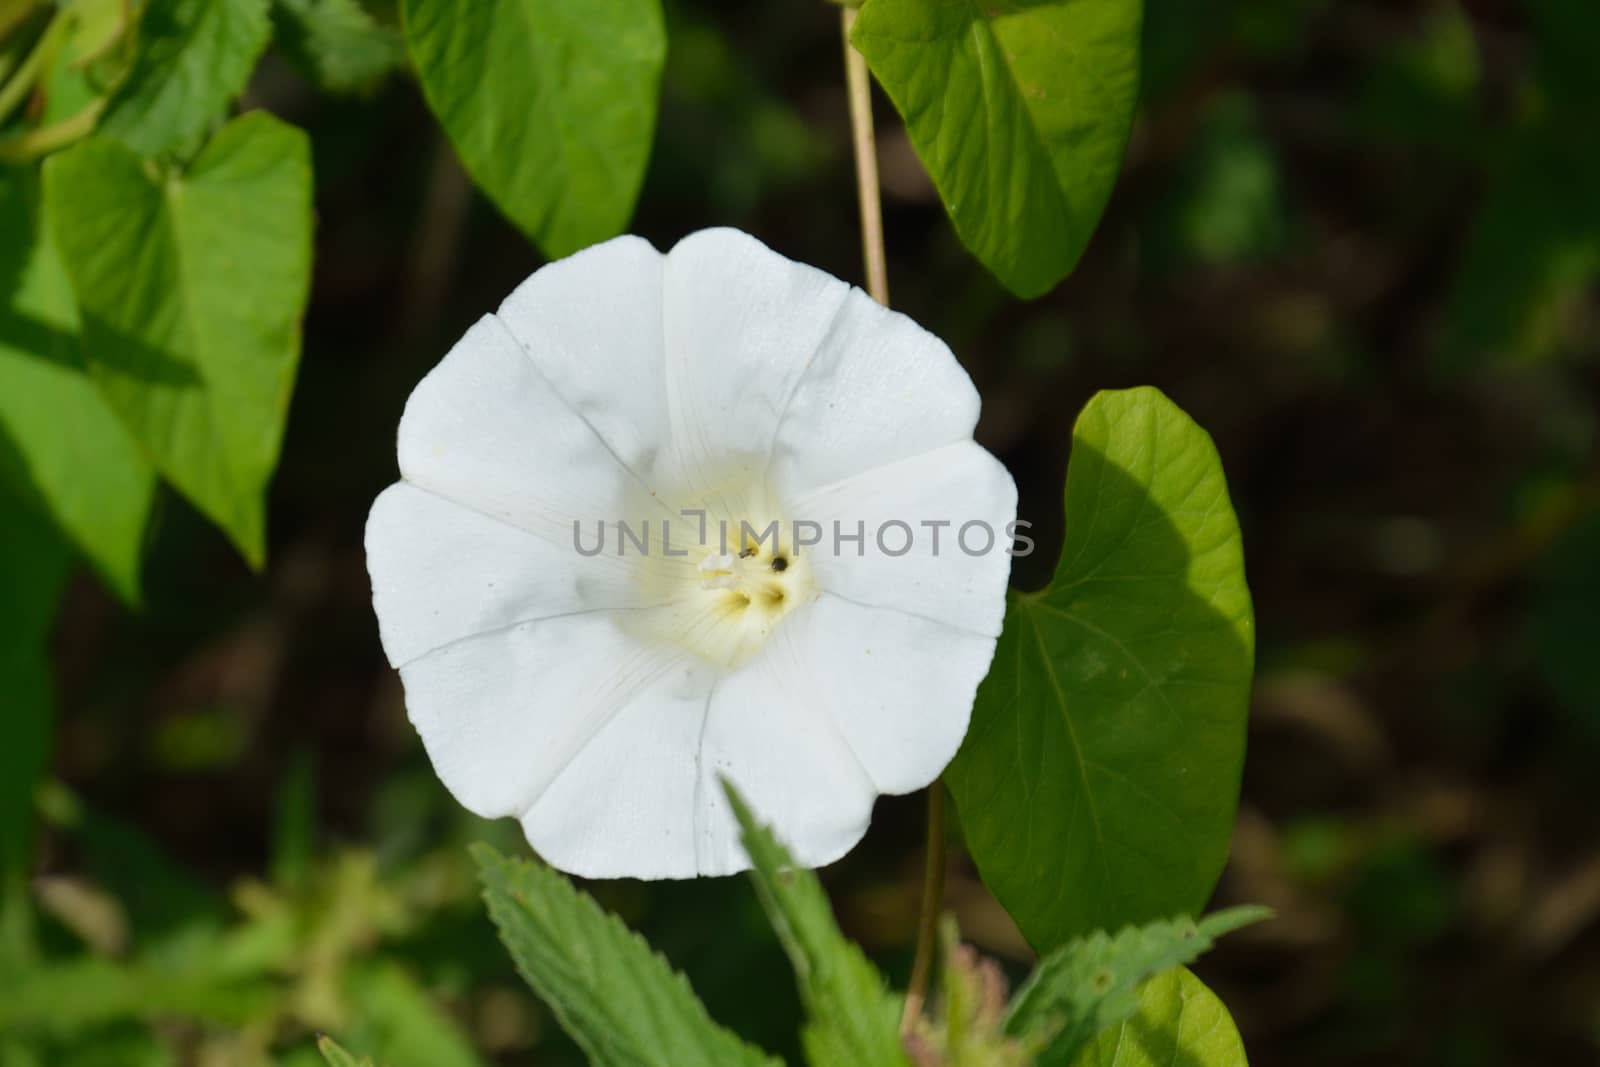 White Bindweed flower